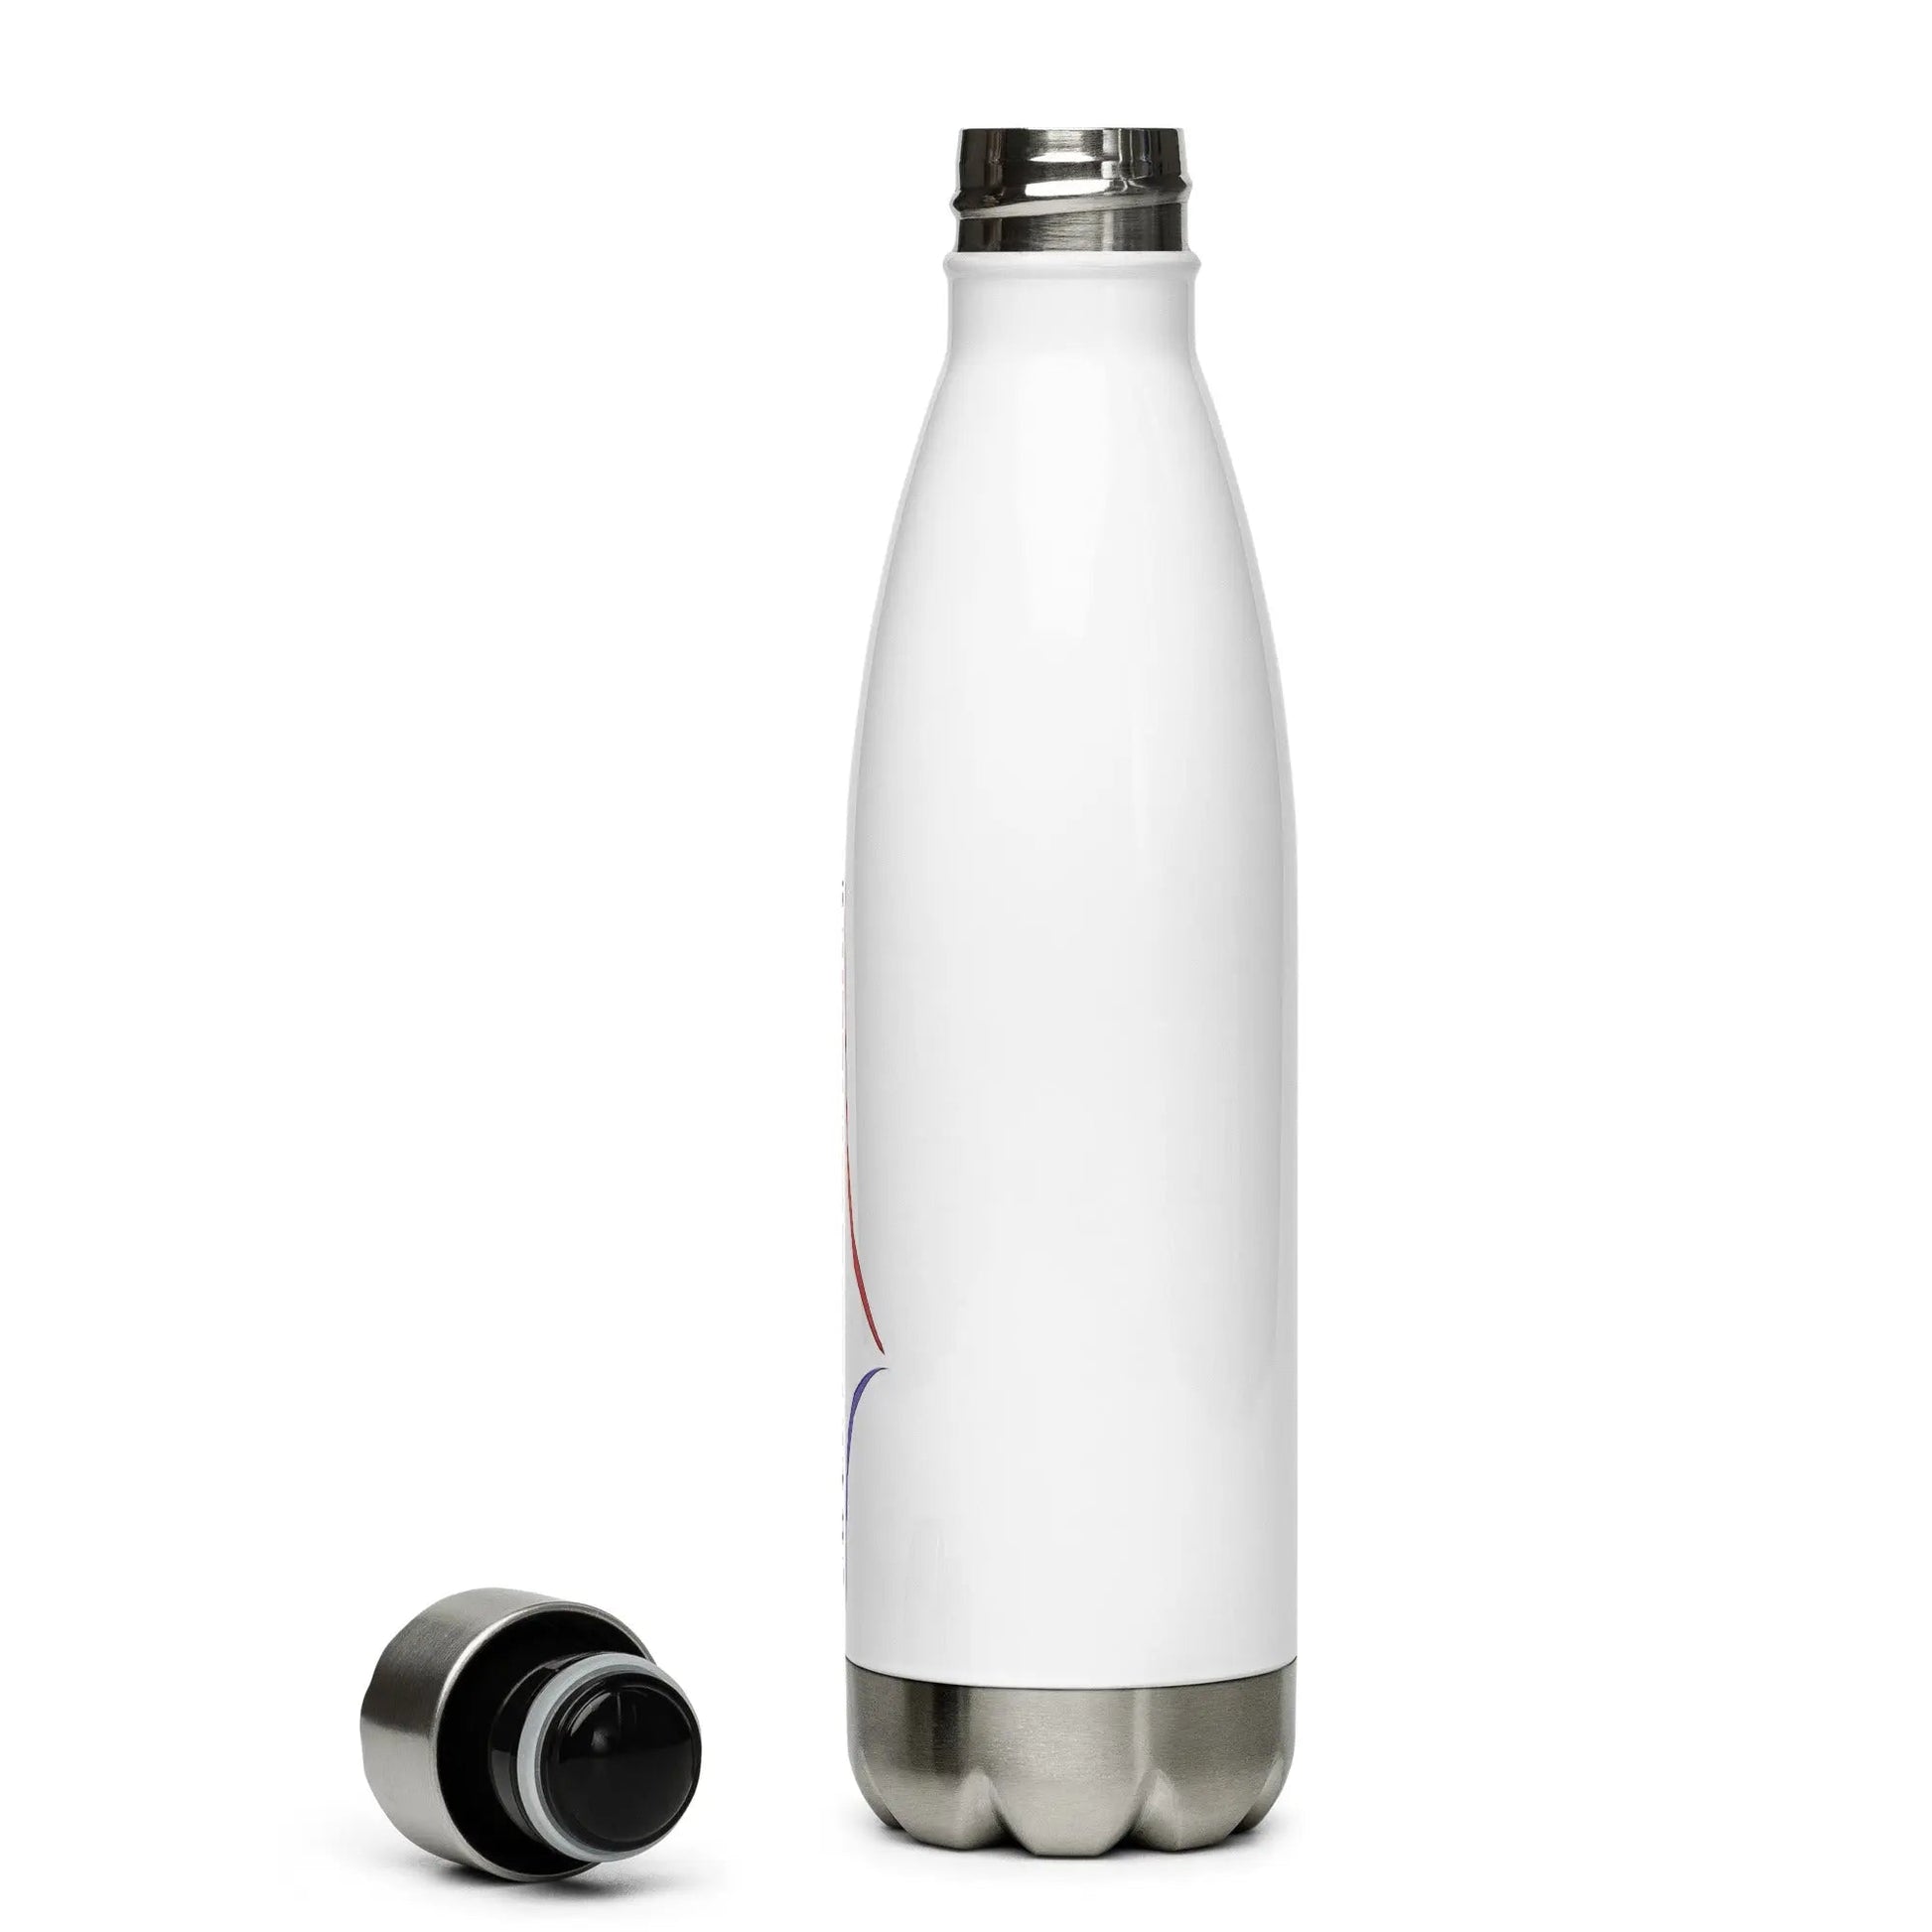 11 Socialliberalerna Stainless Steel Water Bottle by Neduz